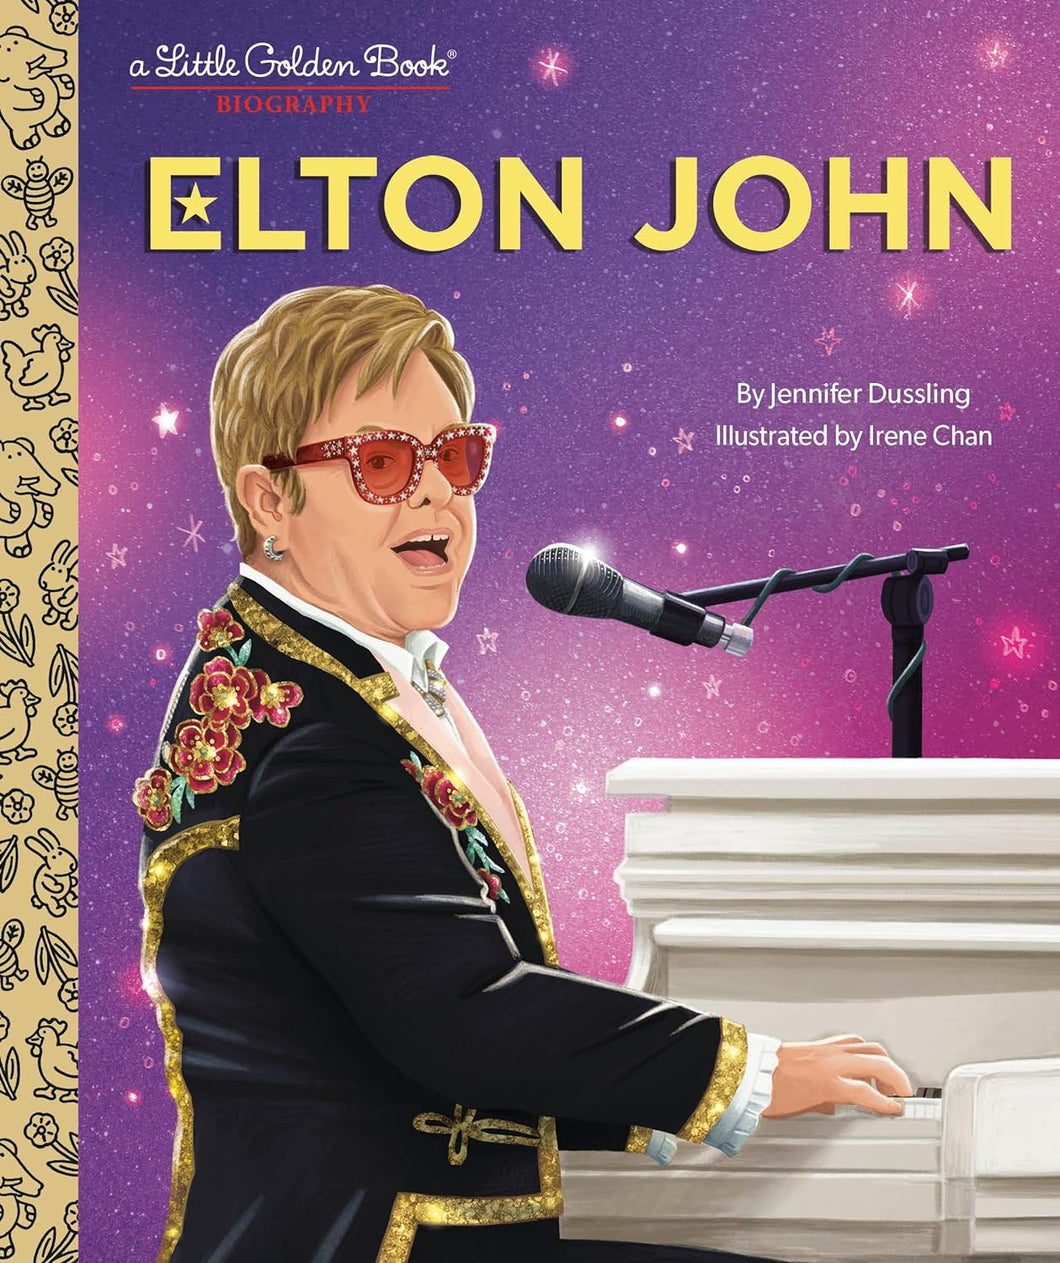 Elton John: A Little Golden Book Biography [Jennifer Dussling & Irene Chan]